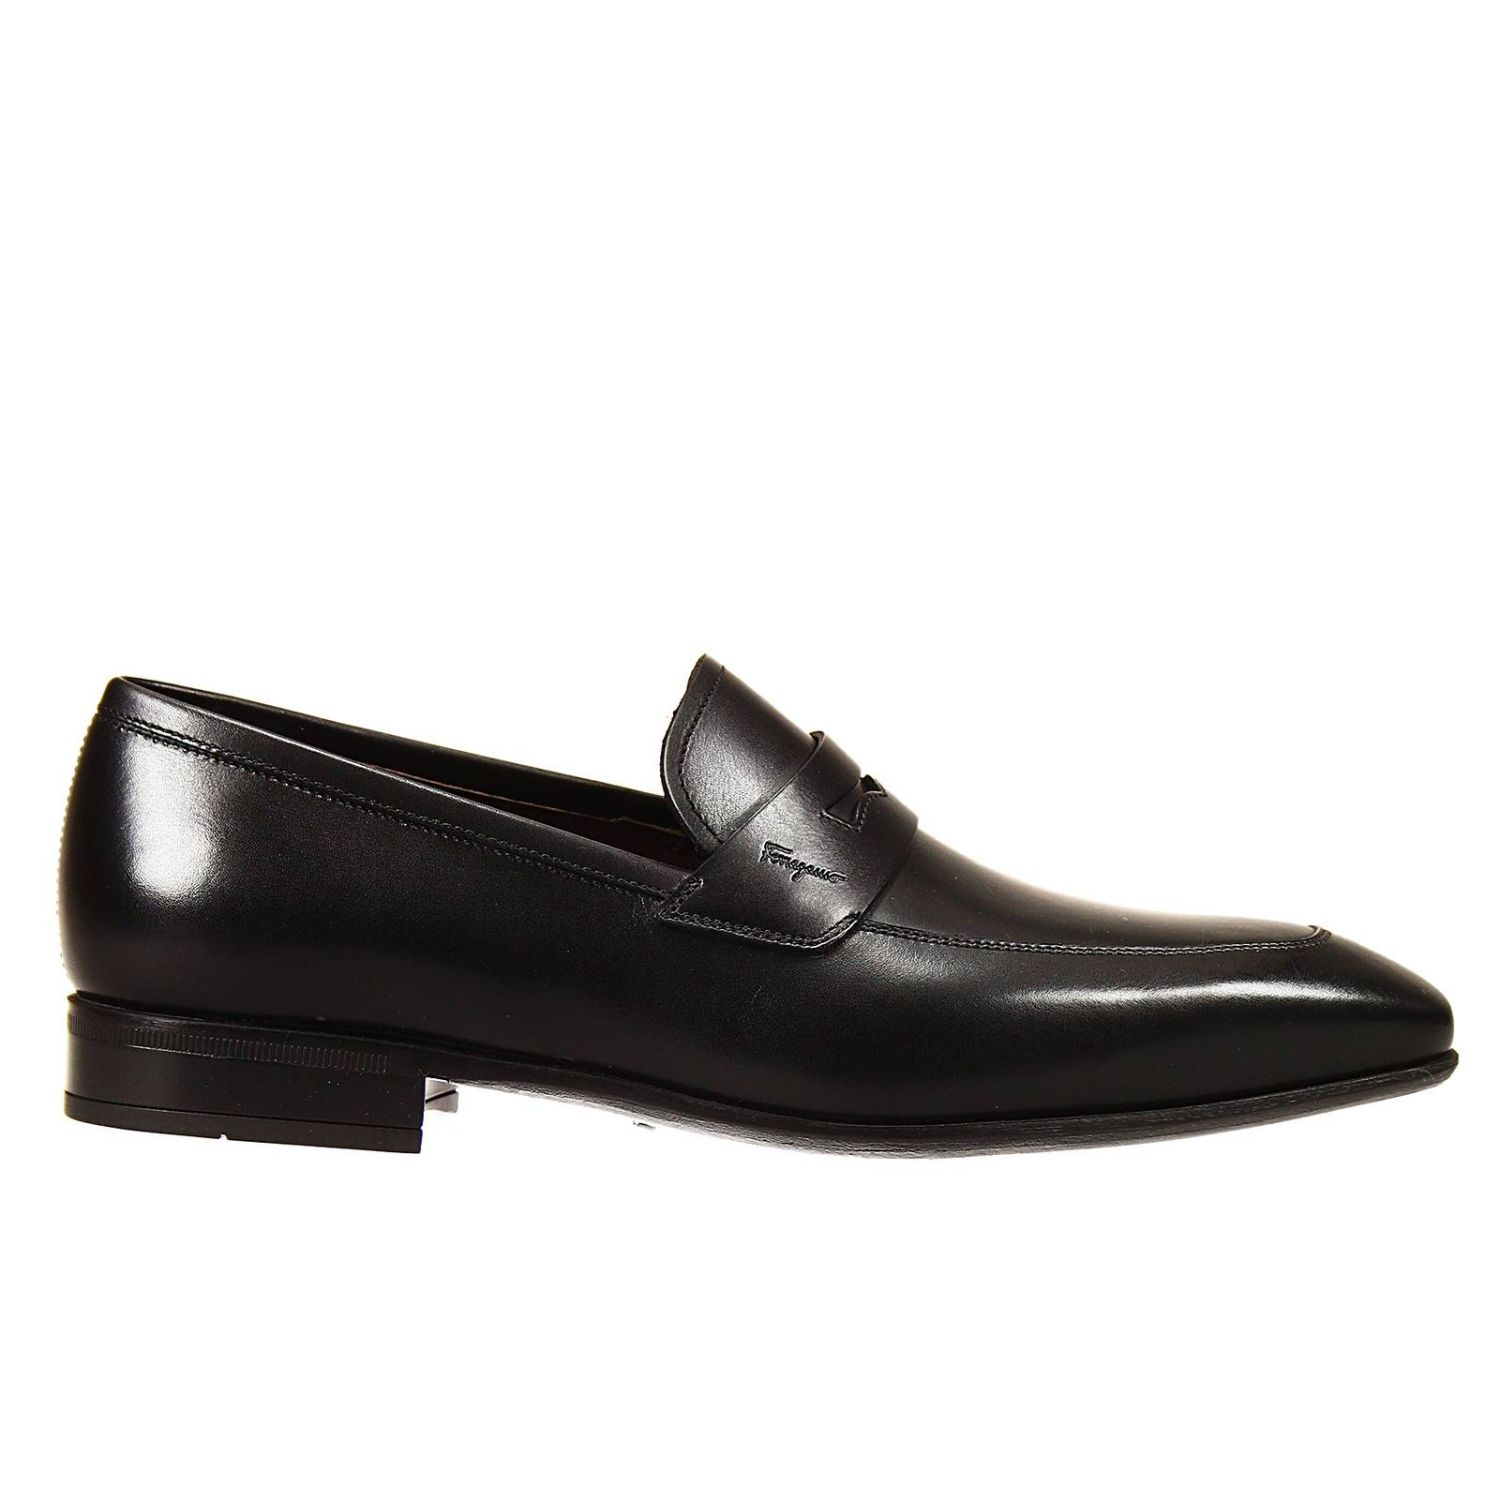 Salvatore Ferragamo Outlet: shoes nomad penny loafer leather bottom ...